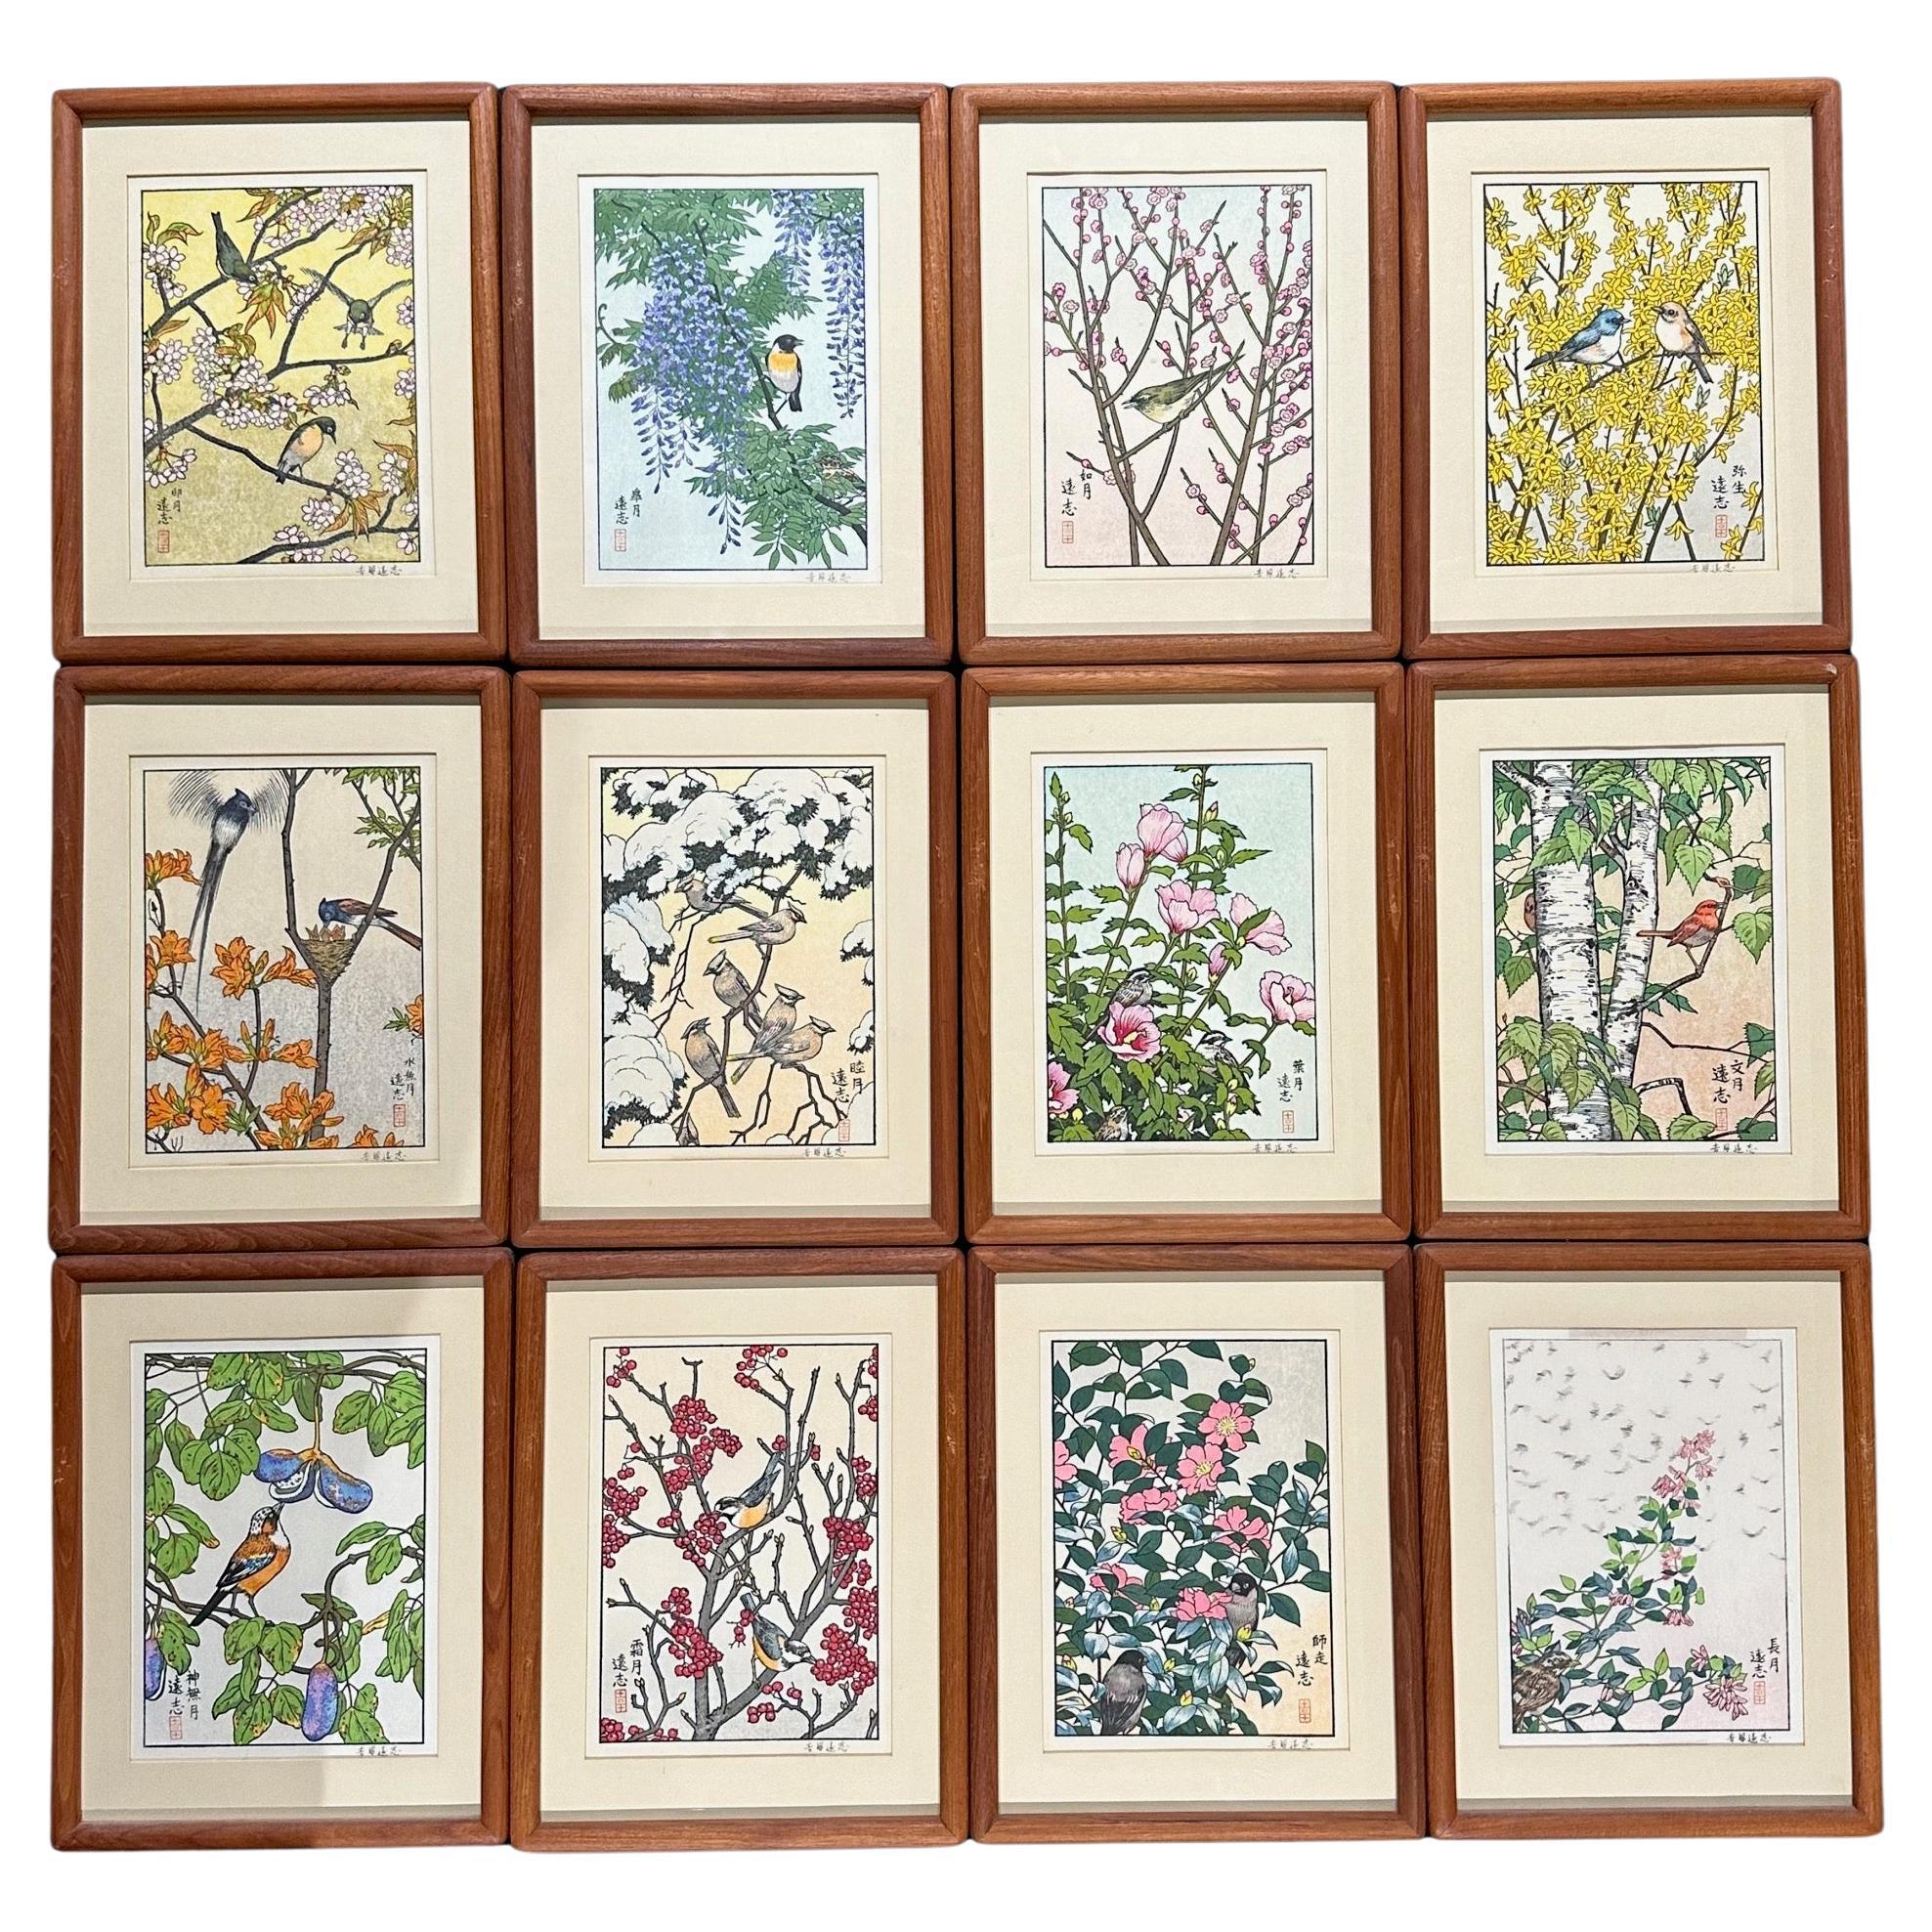 Toshi Yoshida Woodblock Print "Flowers & Birds" Very Rare Complete Set of 12